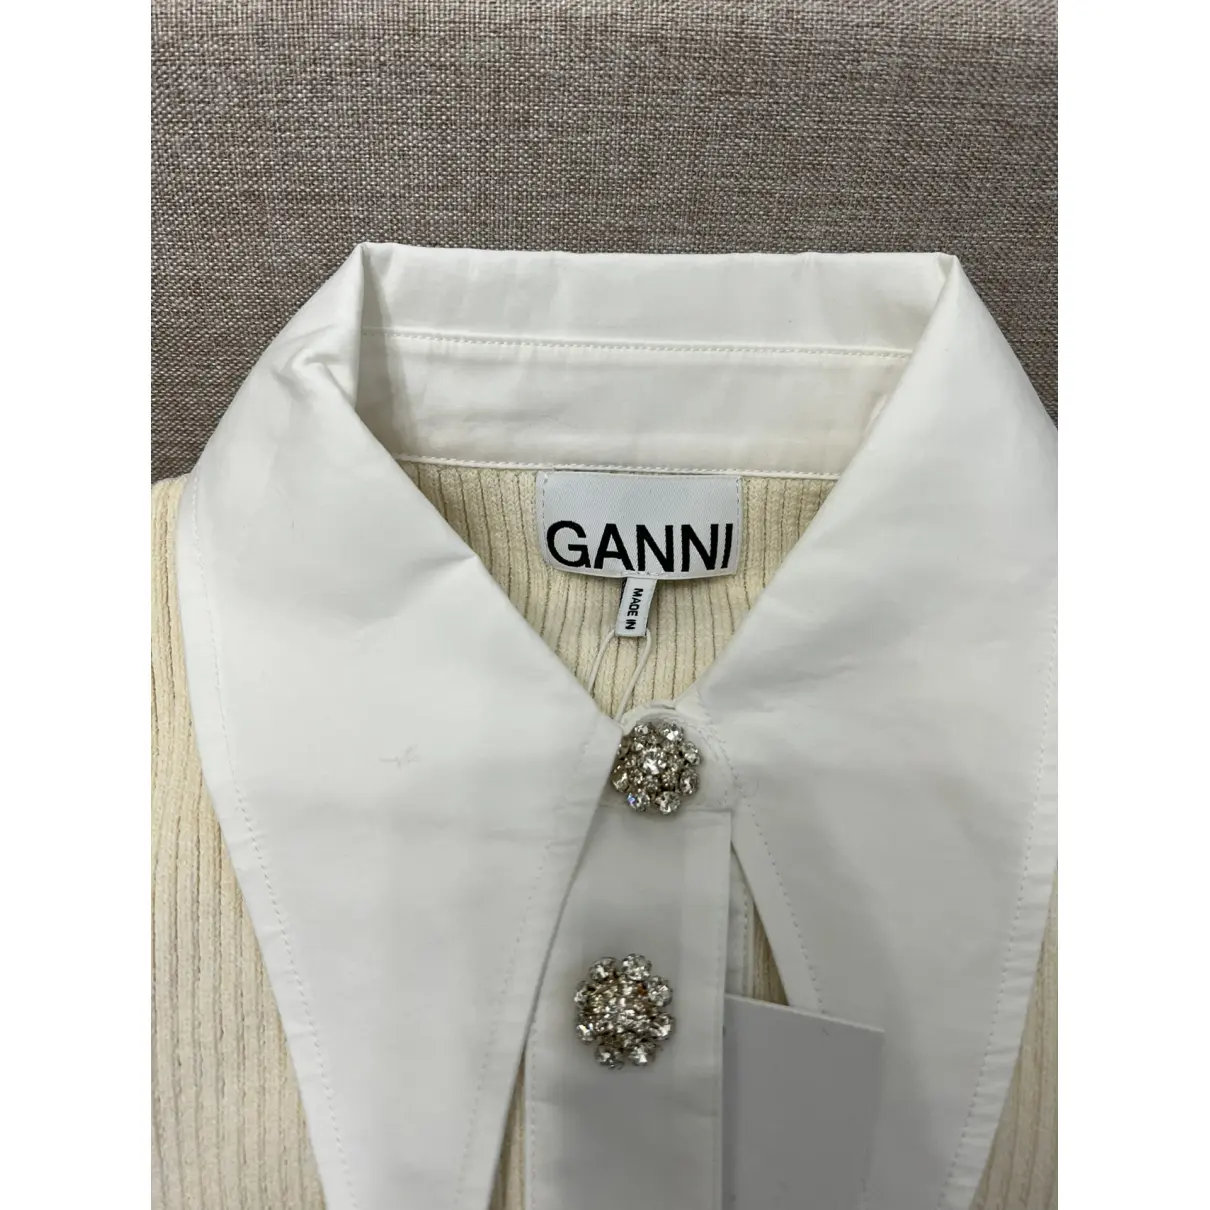 Buy Ganni Spring Summer 2020 cardigan online